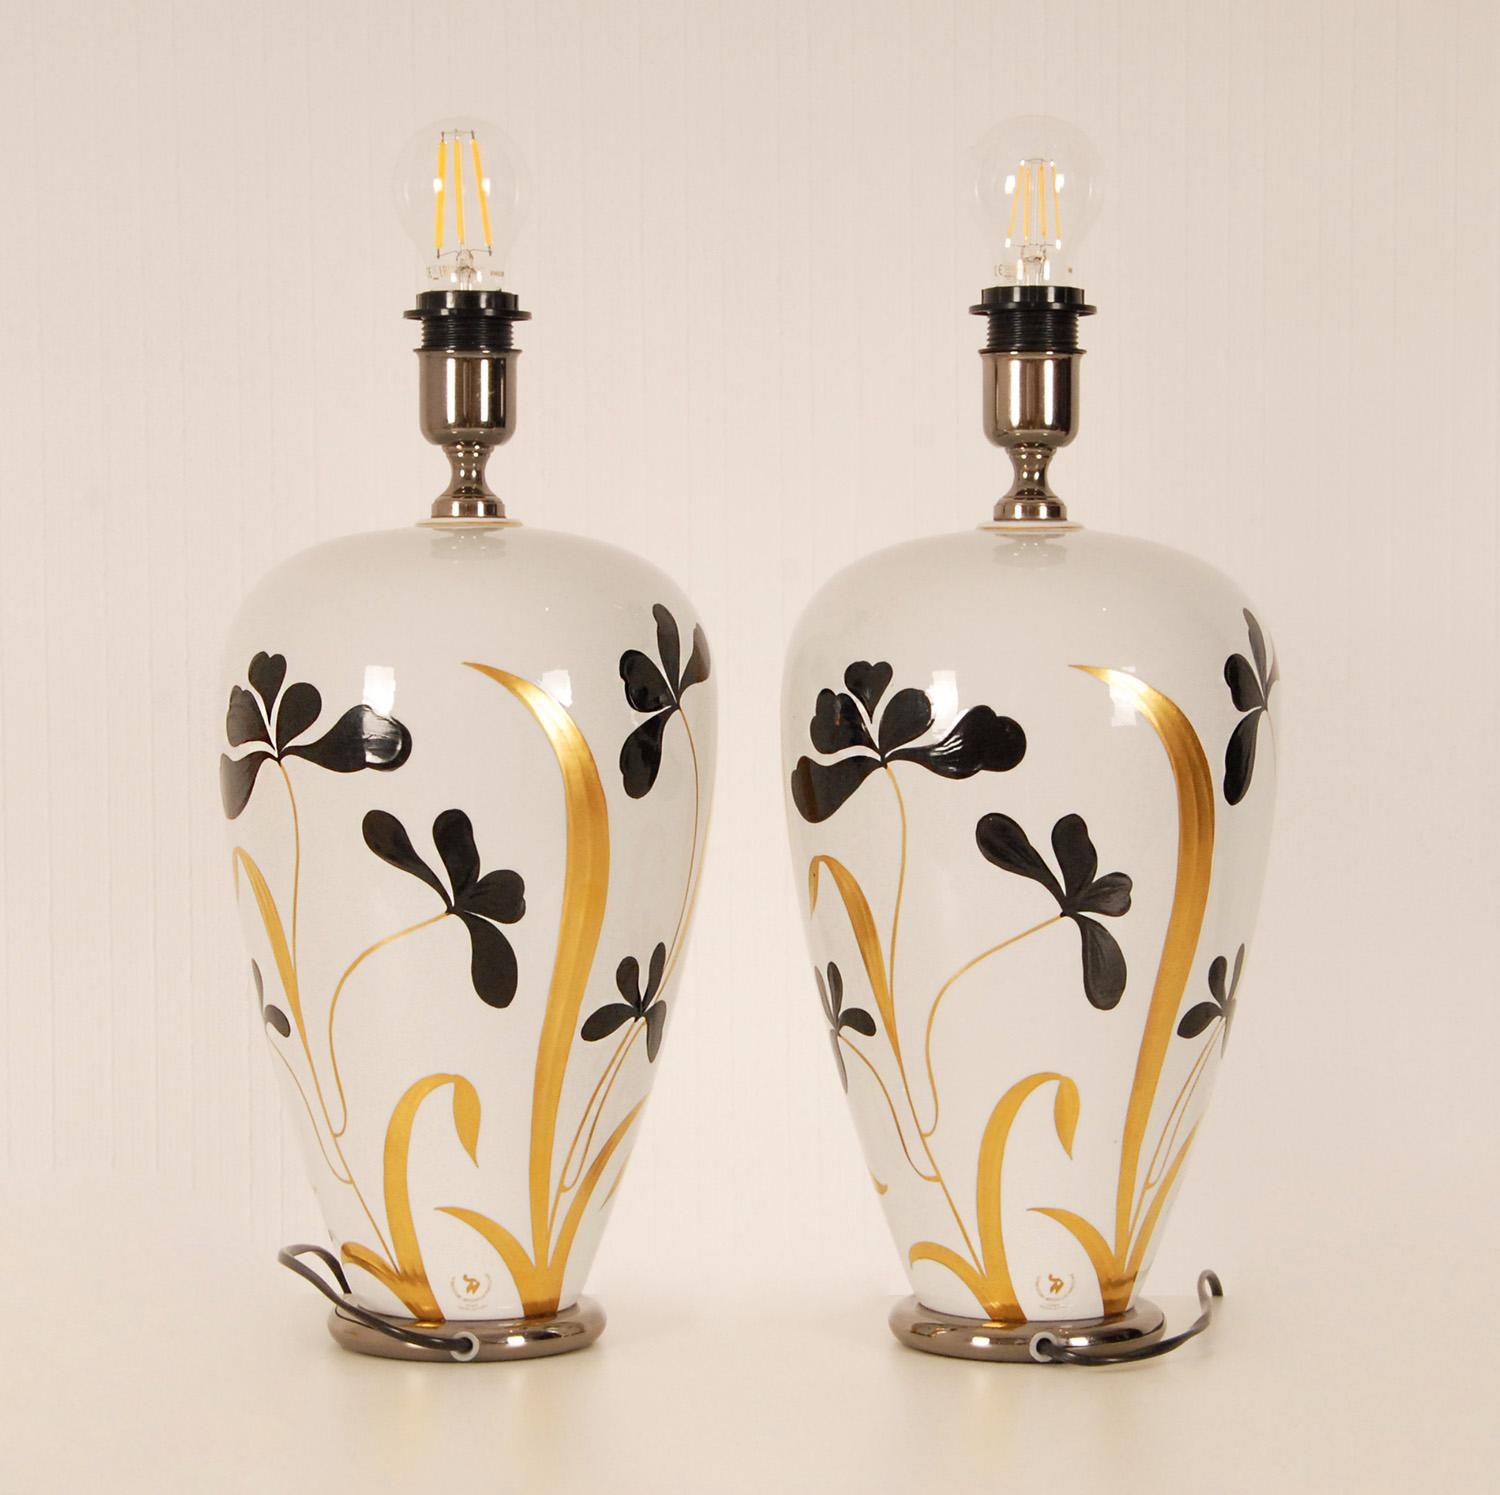 Vintage 1970s Italian Ceramic Vase Lamps Gold Black White Porcelain, a Pair For Sale 1